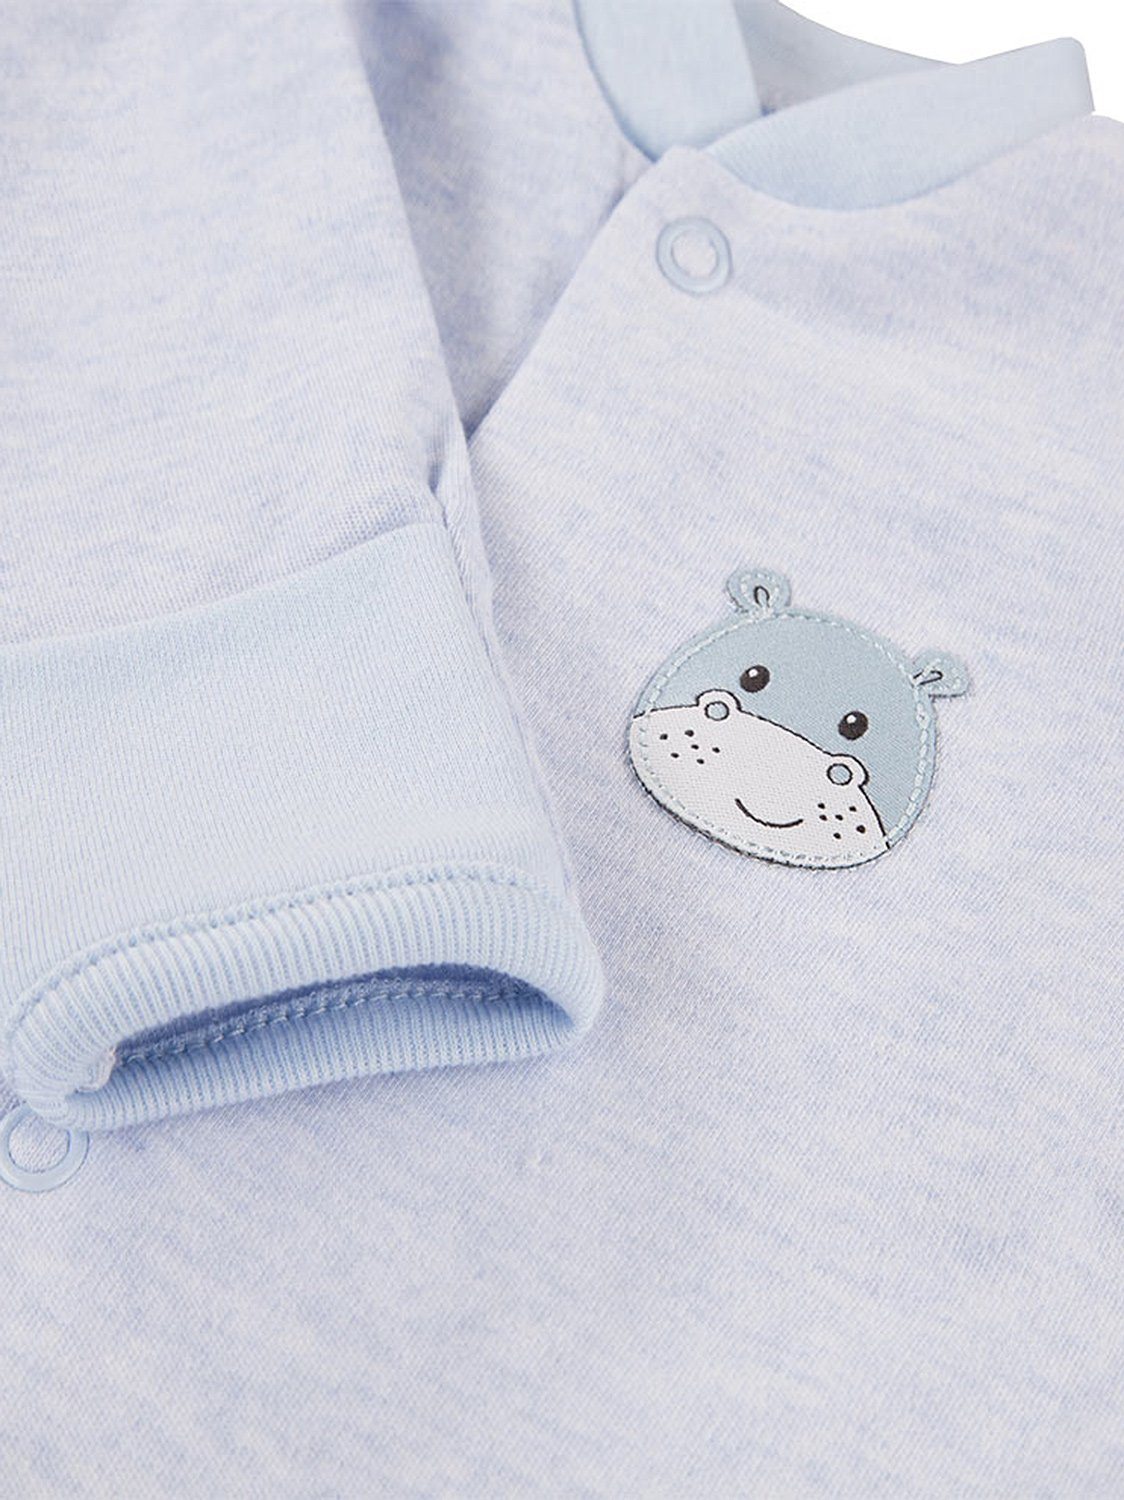 Early Baby Footed Sleepsuit, Cute Hippo Design - Blue Sleepsuit / Babygrow EEVI 